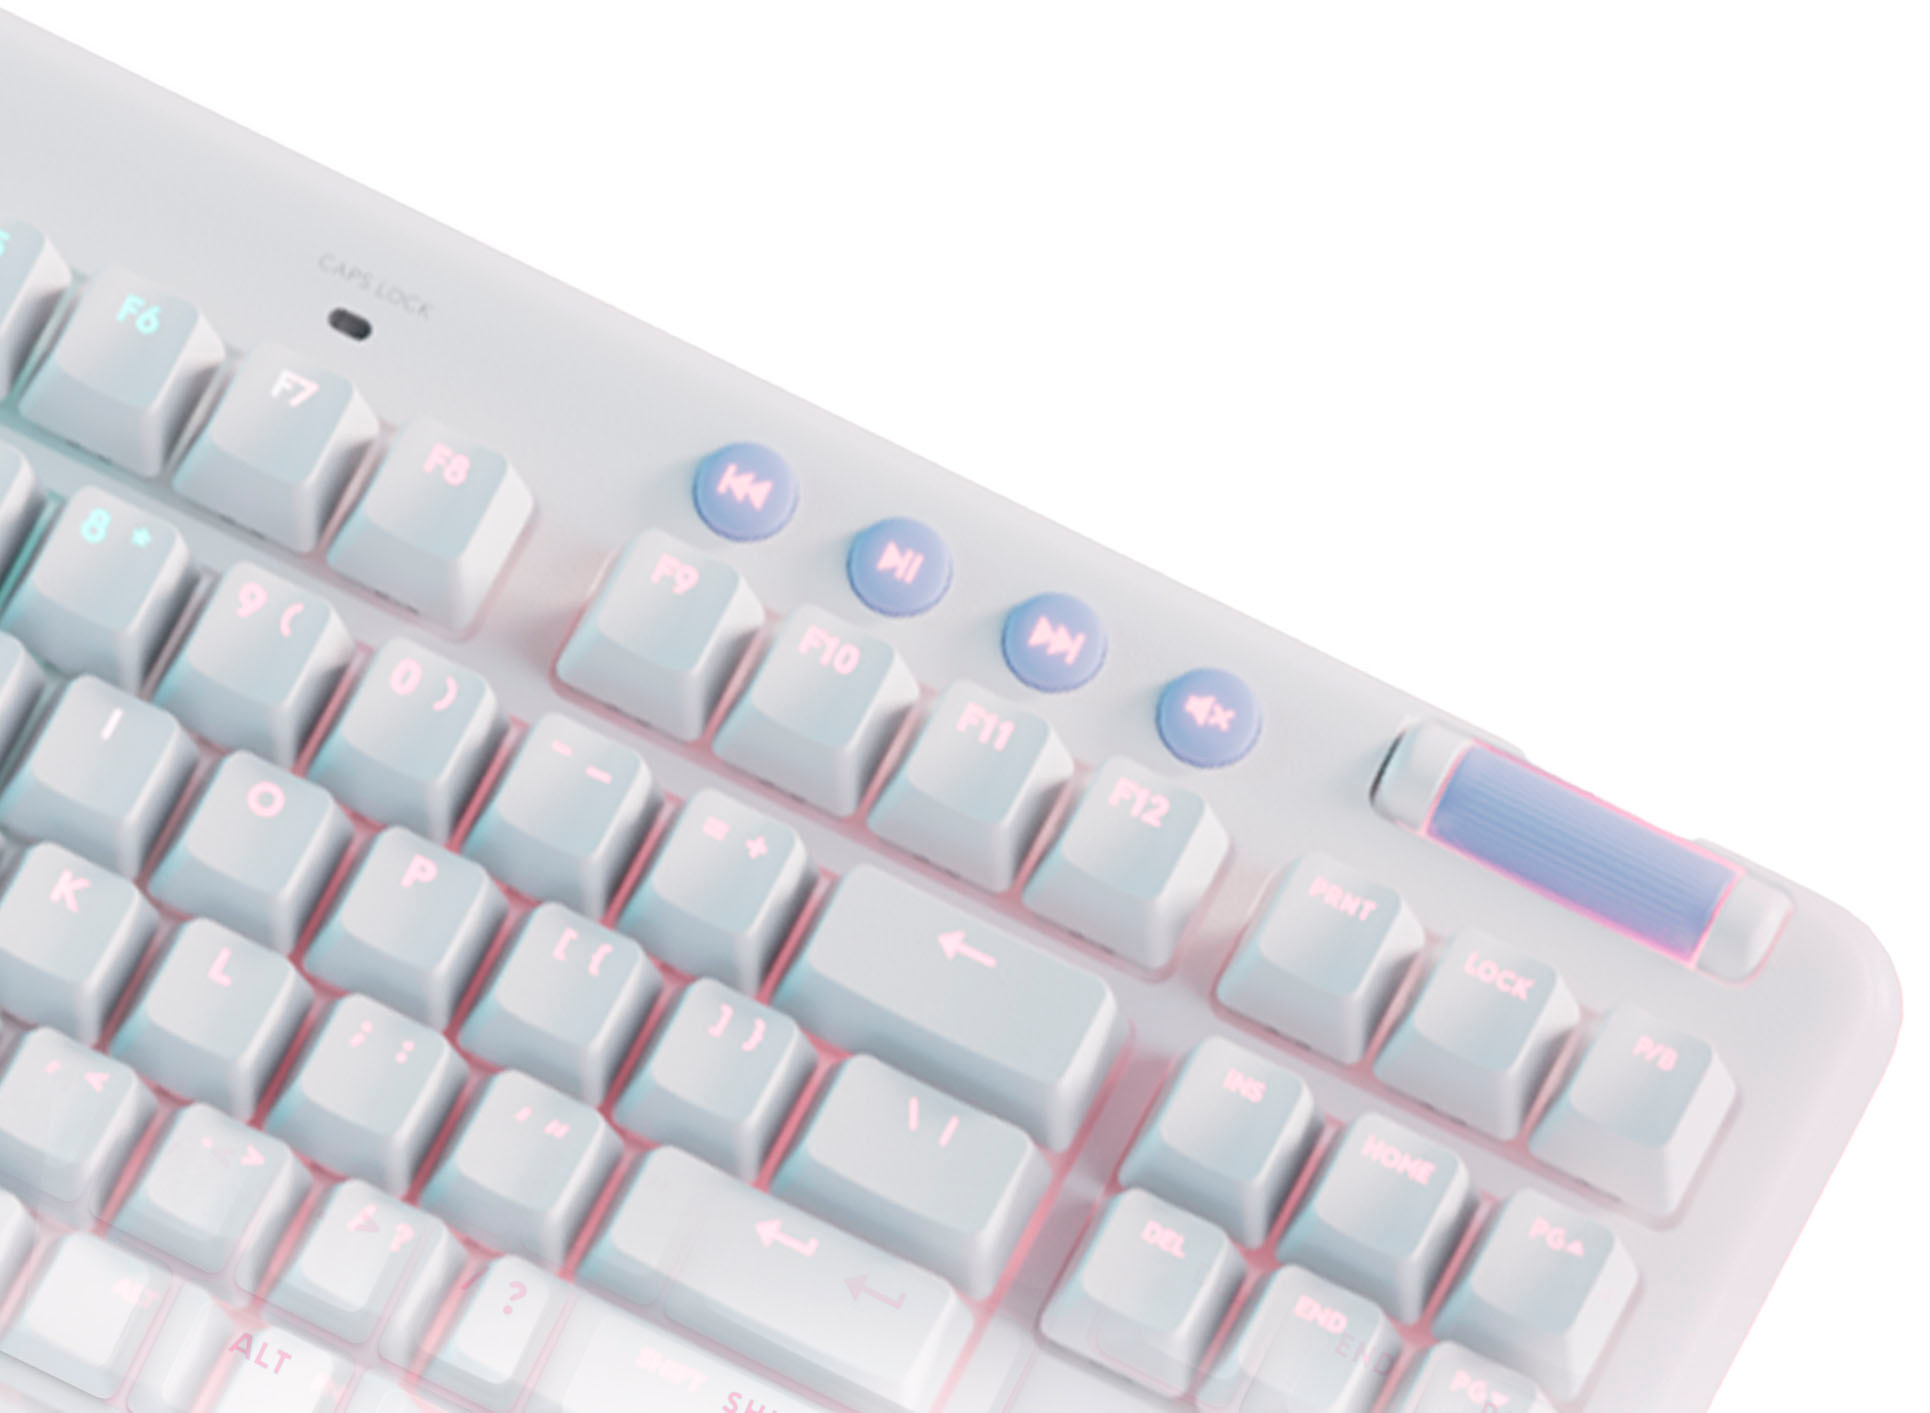 G713 TKL Mechanical Gaming Keyboard with RGB